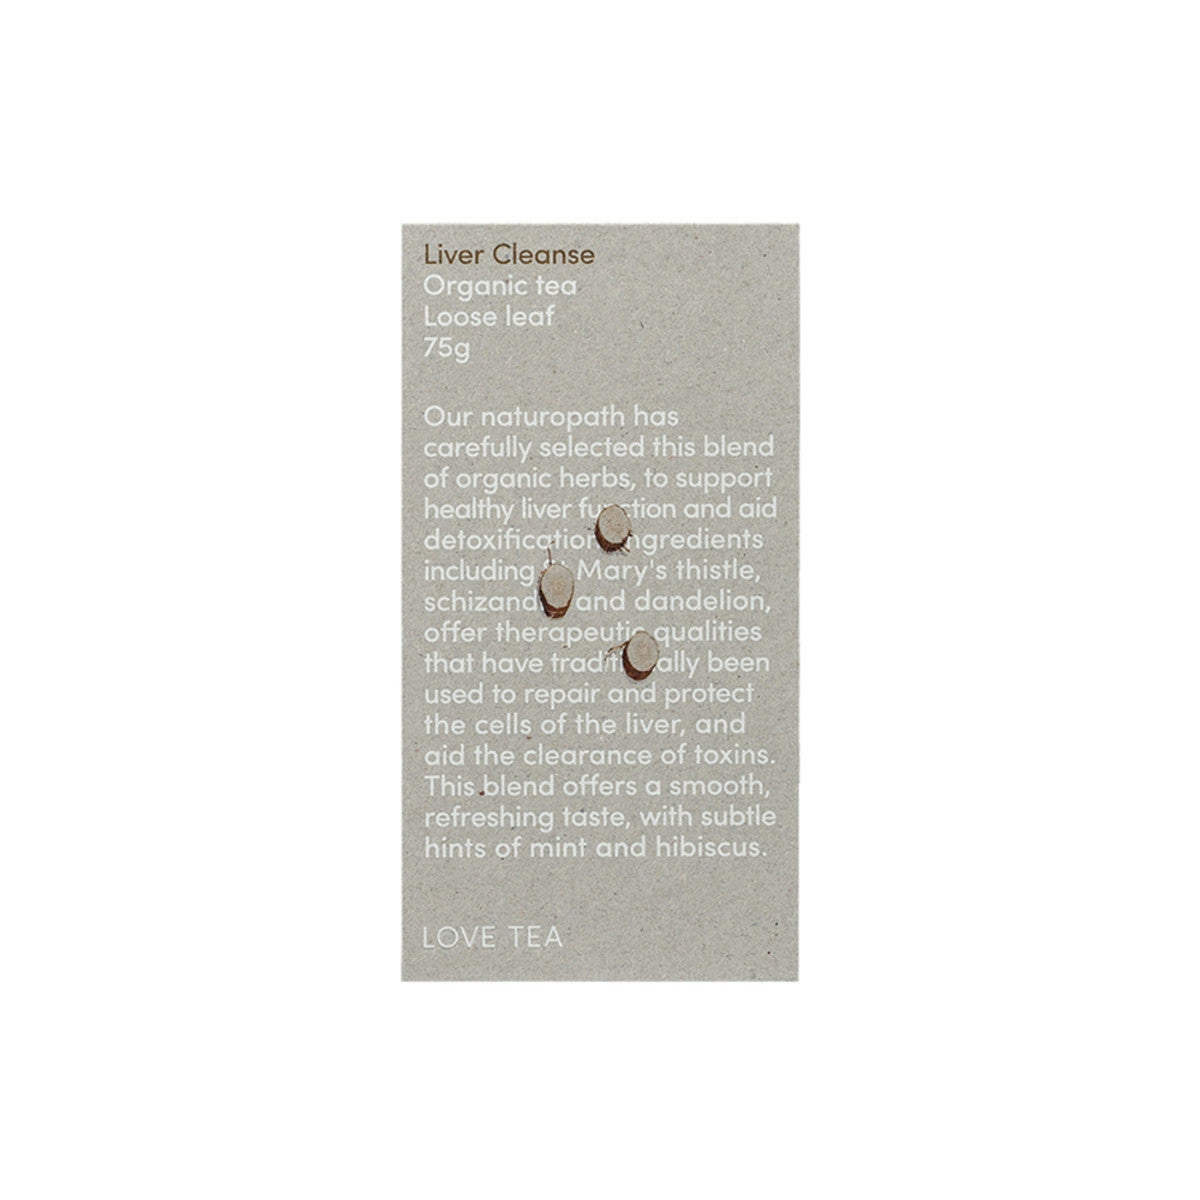 image of Love Tea Organic Liver Cleanse Tea Loose Leaf 75g on white background 